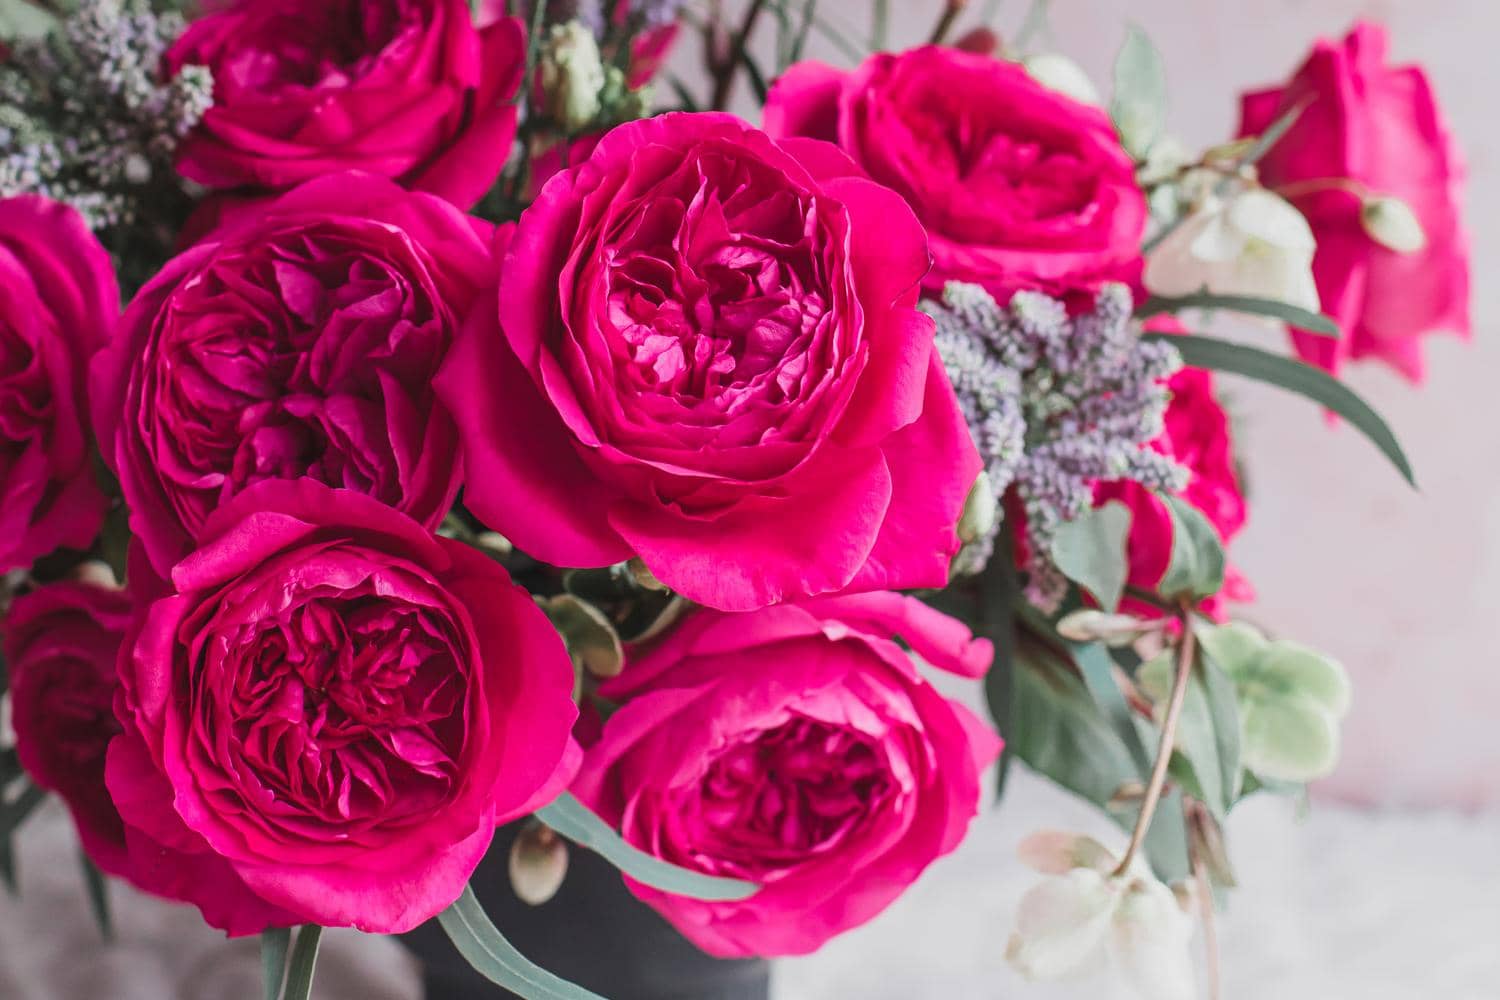 Capability ترتيب إناء الورود الوردي